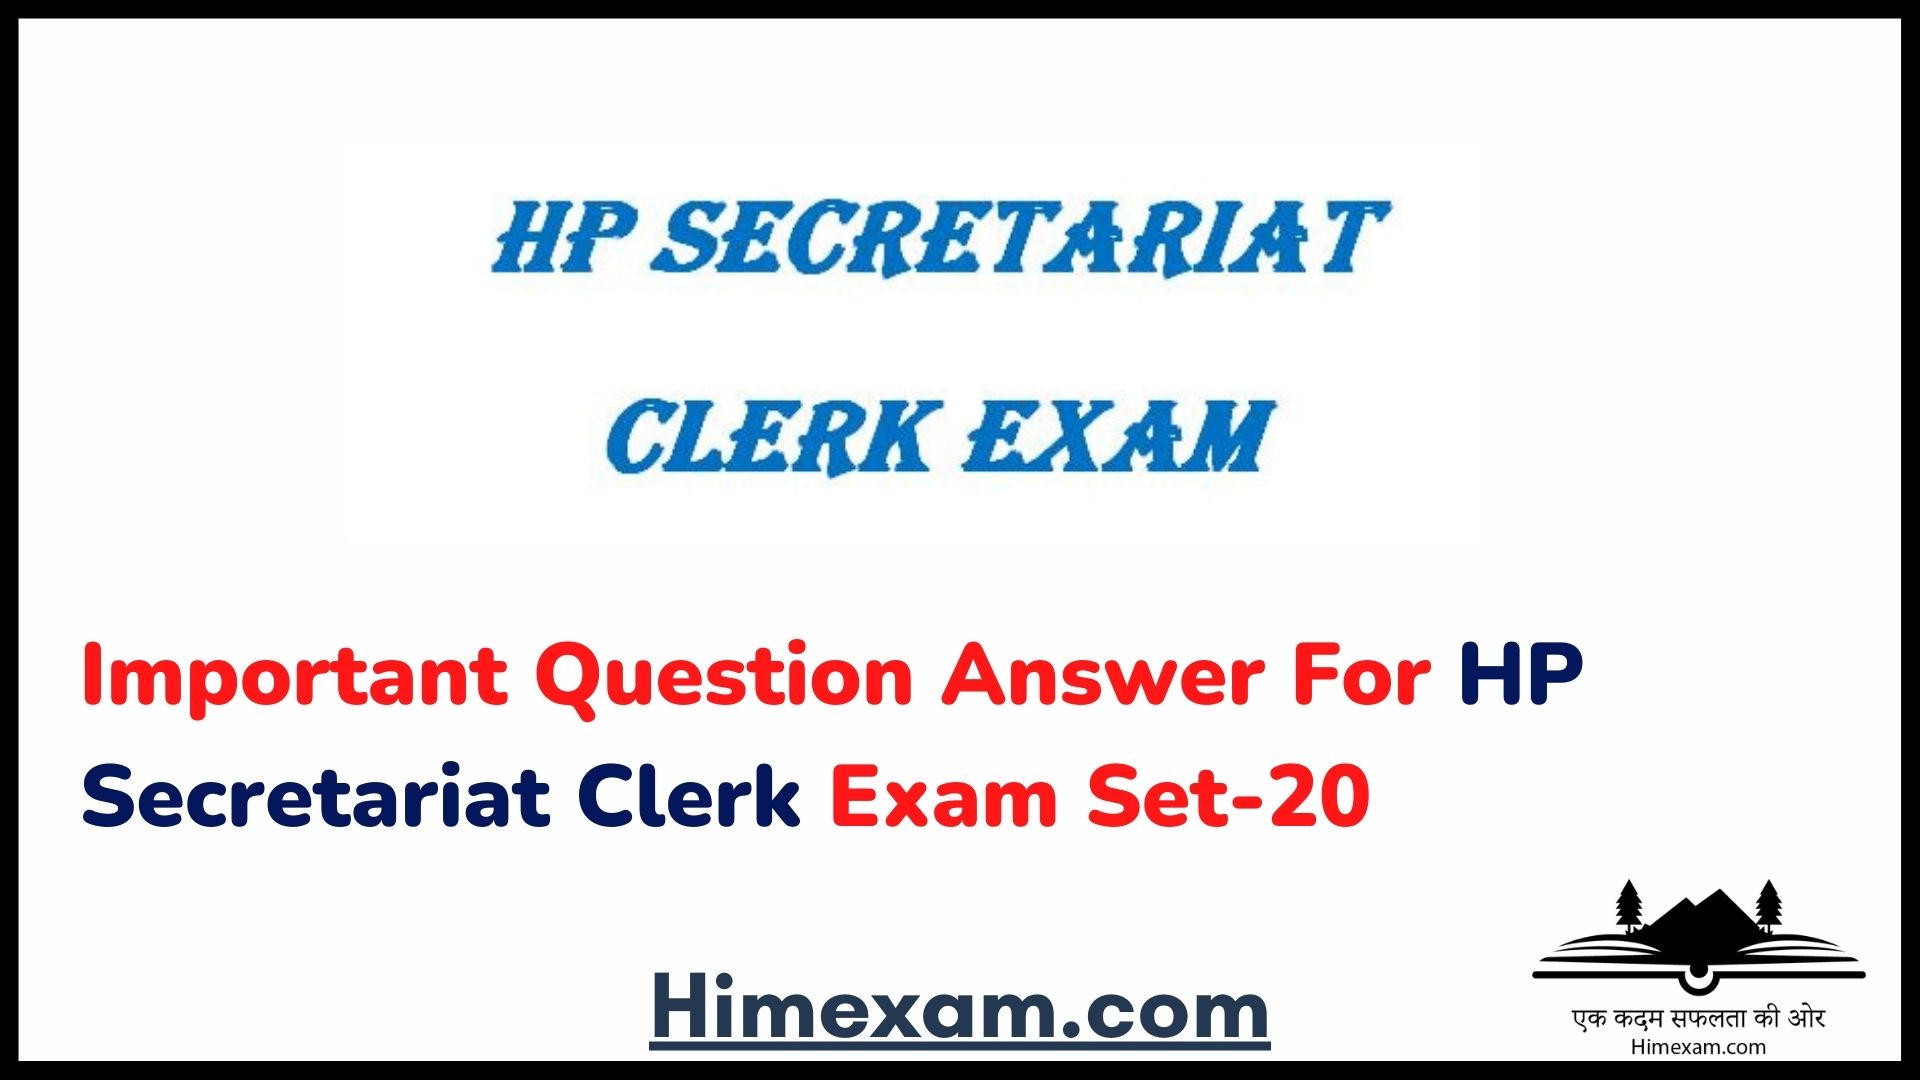 Important Question Answer For HP Secretariat Clerk Exam Set-20